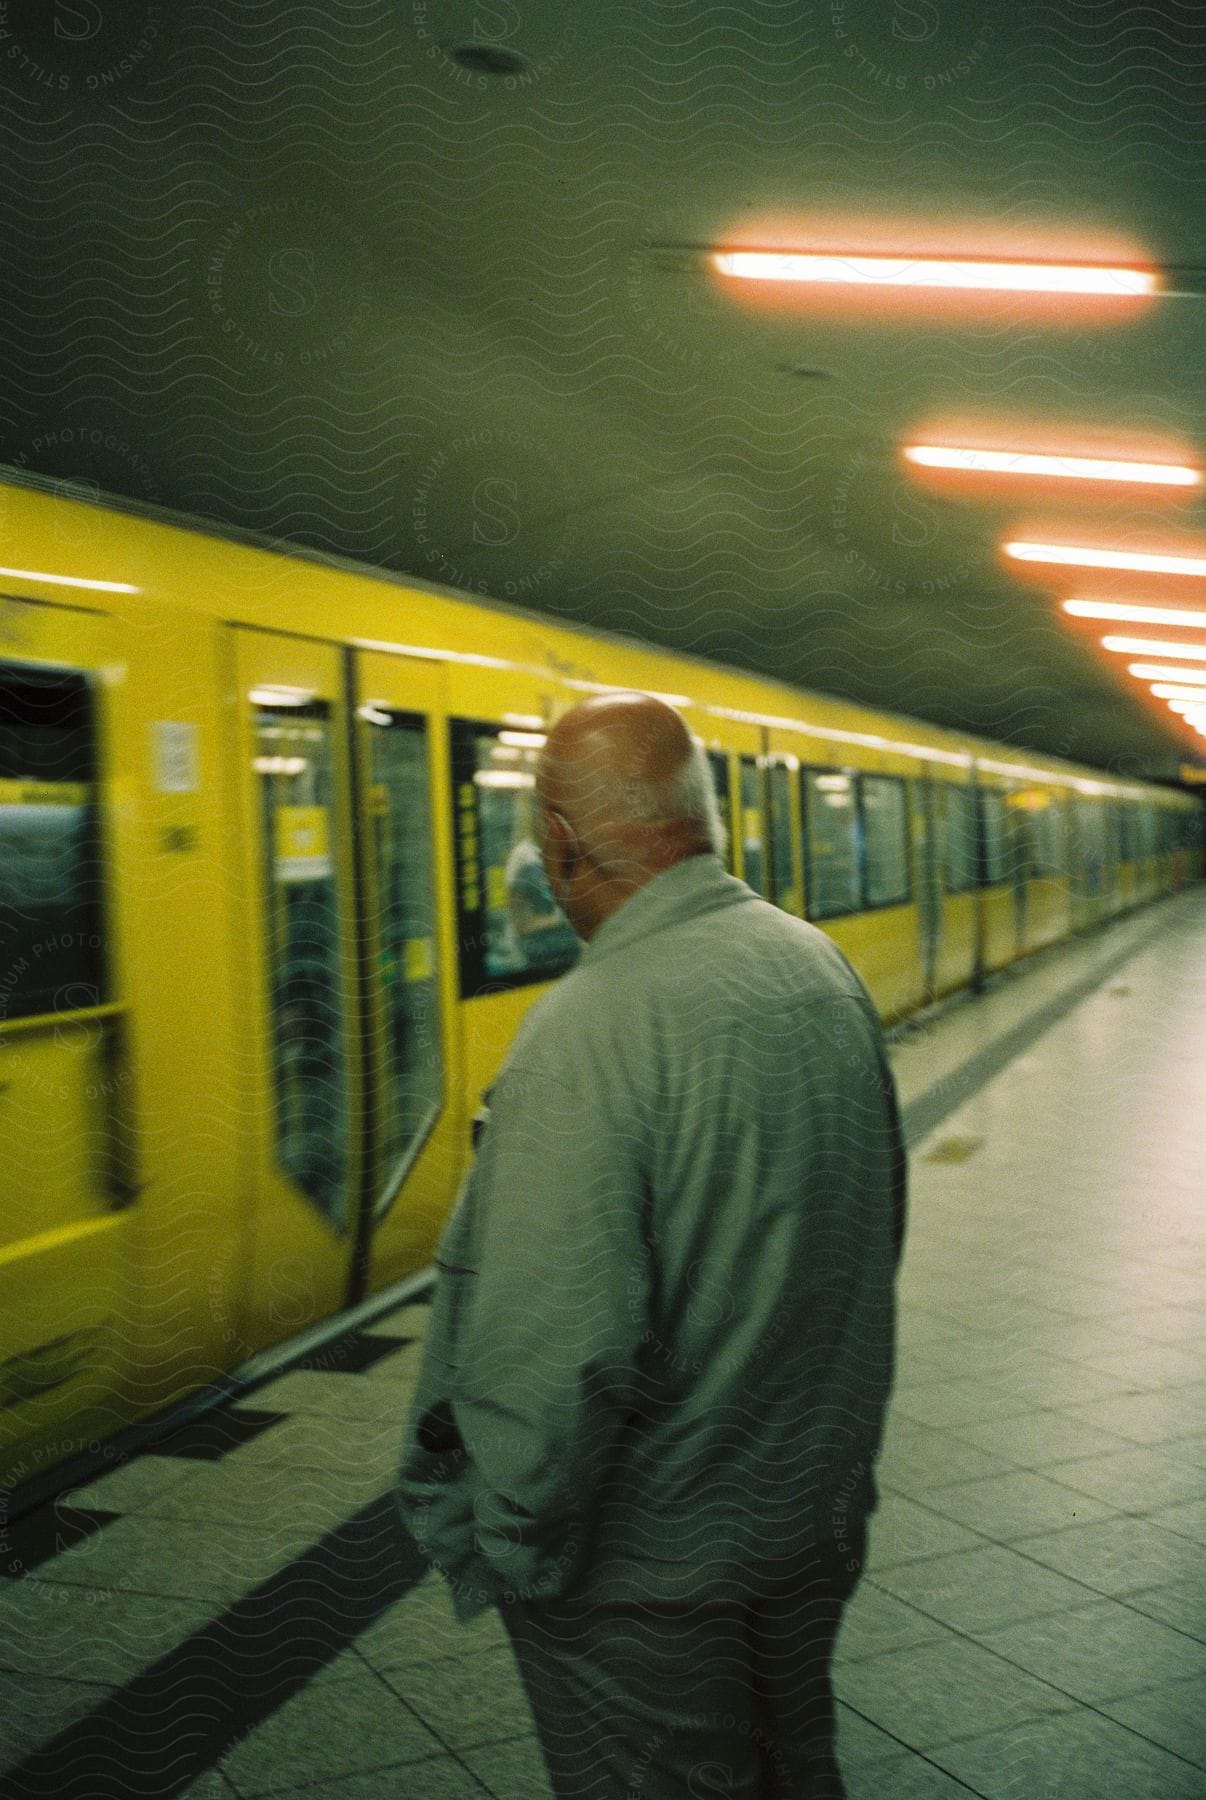 An older man waits alone on a concrete platform as a yellow subway train arrives